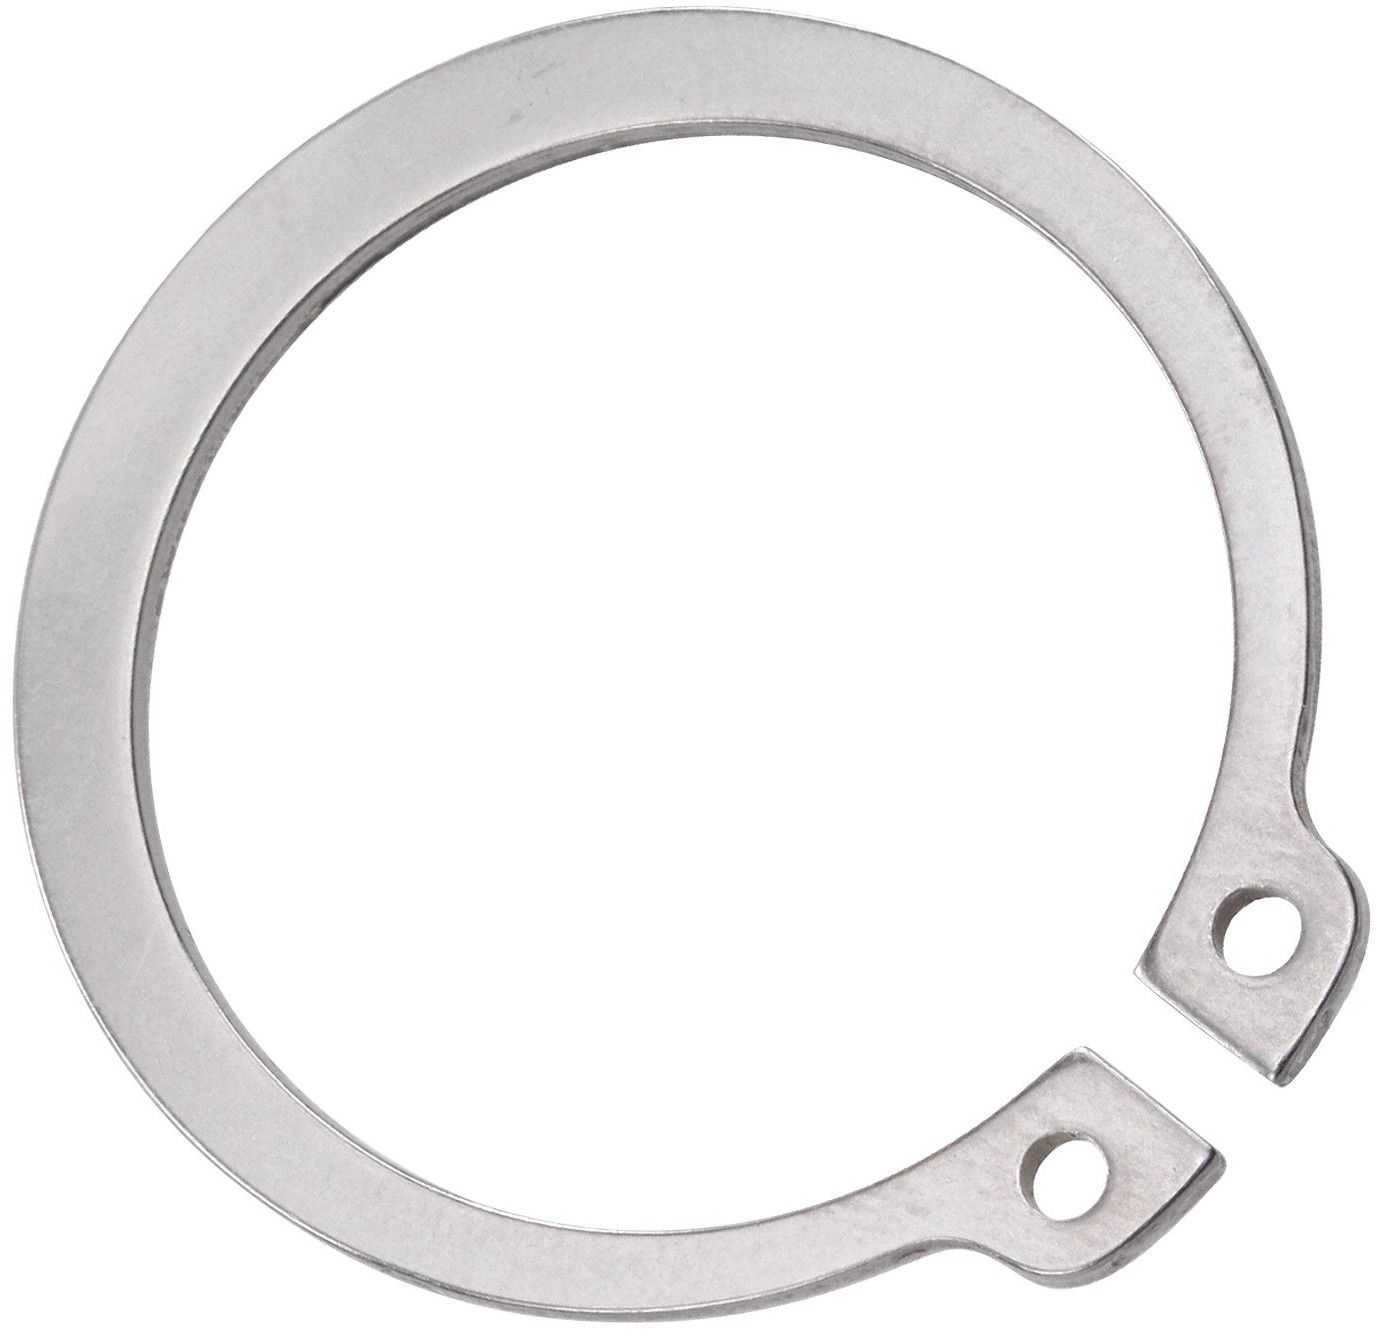 Кольцо стопорное наружное 120х4 DIN 471, нержавеющая сталь 1.4122 (А2) - фото